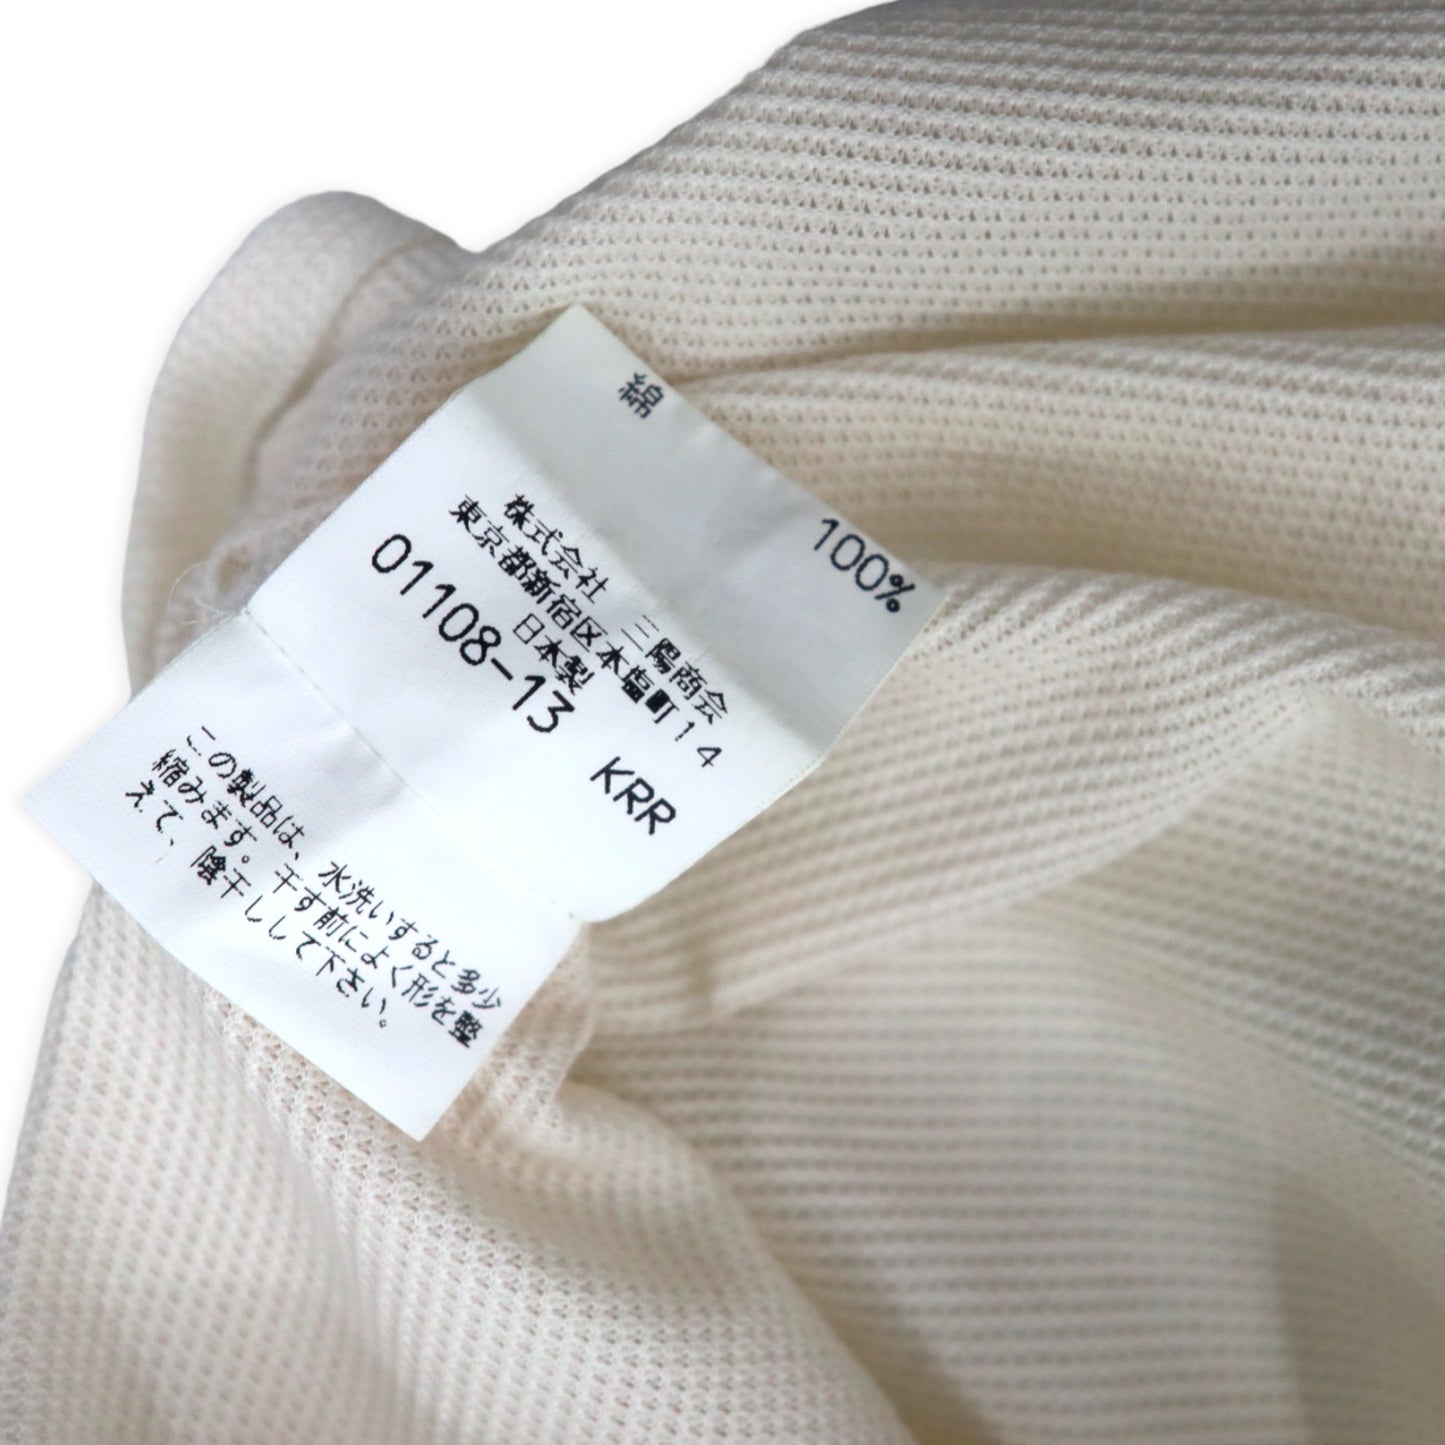 Burberrys オールド ワッフル地 半袖シャツ MA ホワイト コットン ワンポイントロゴ刺繍 日本製